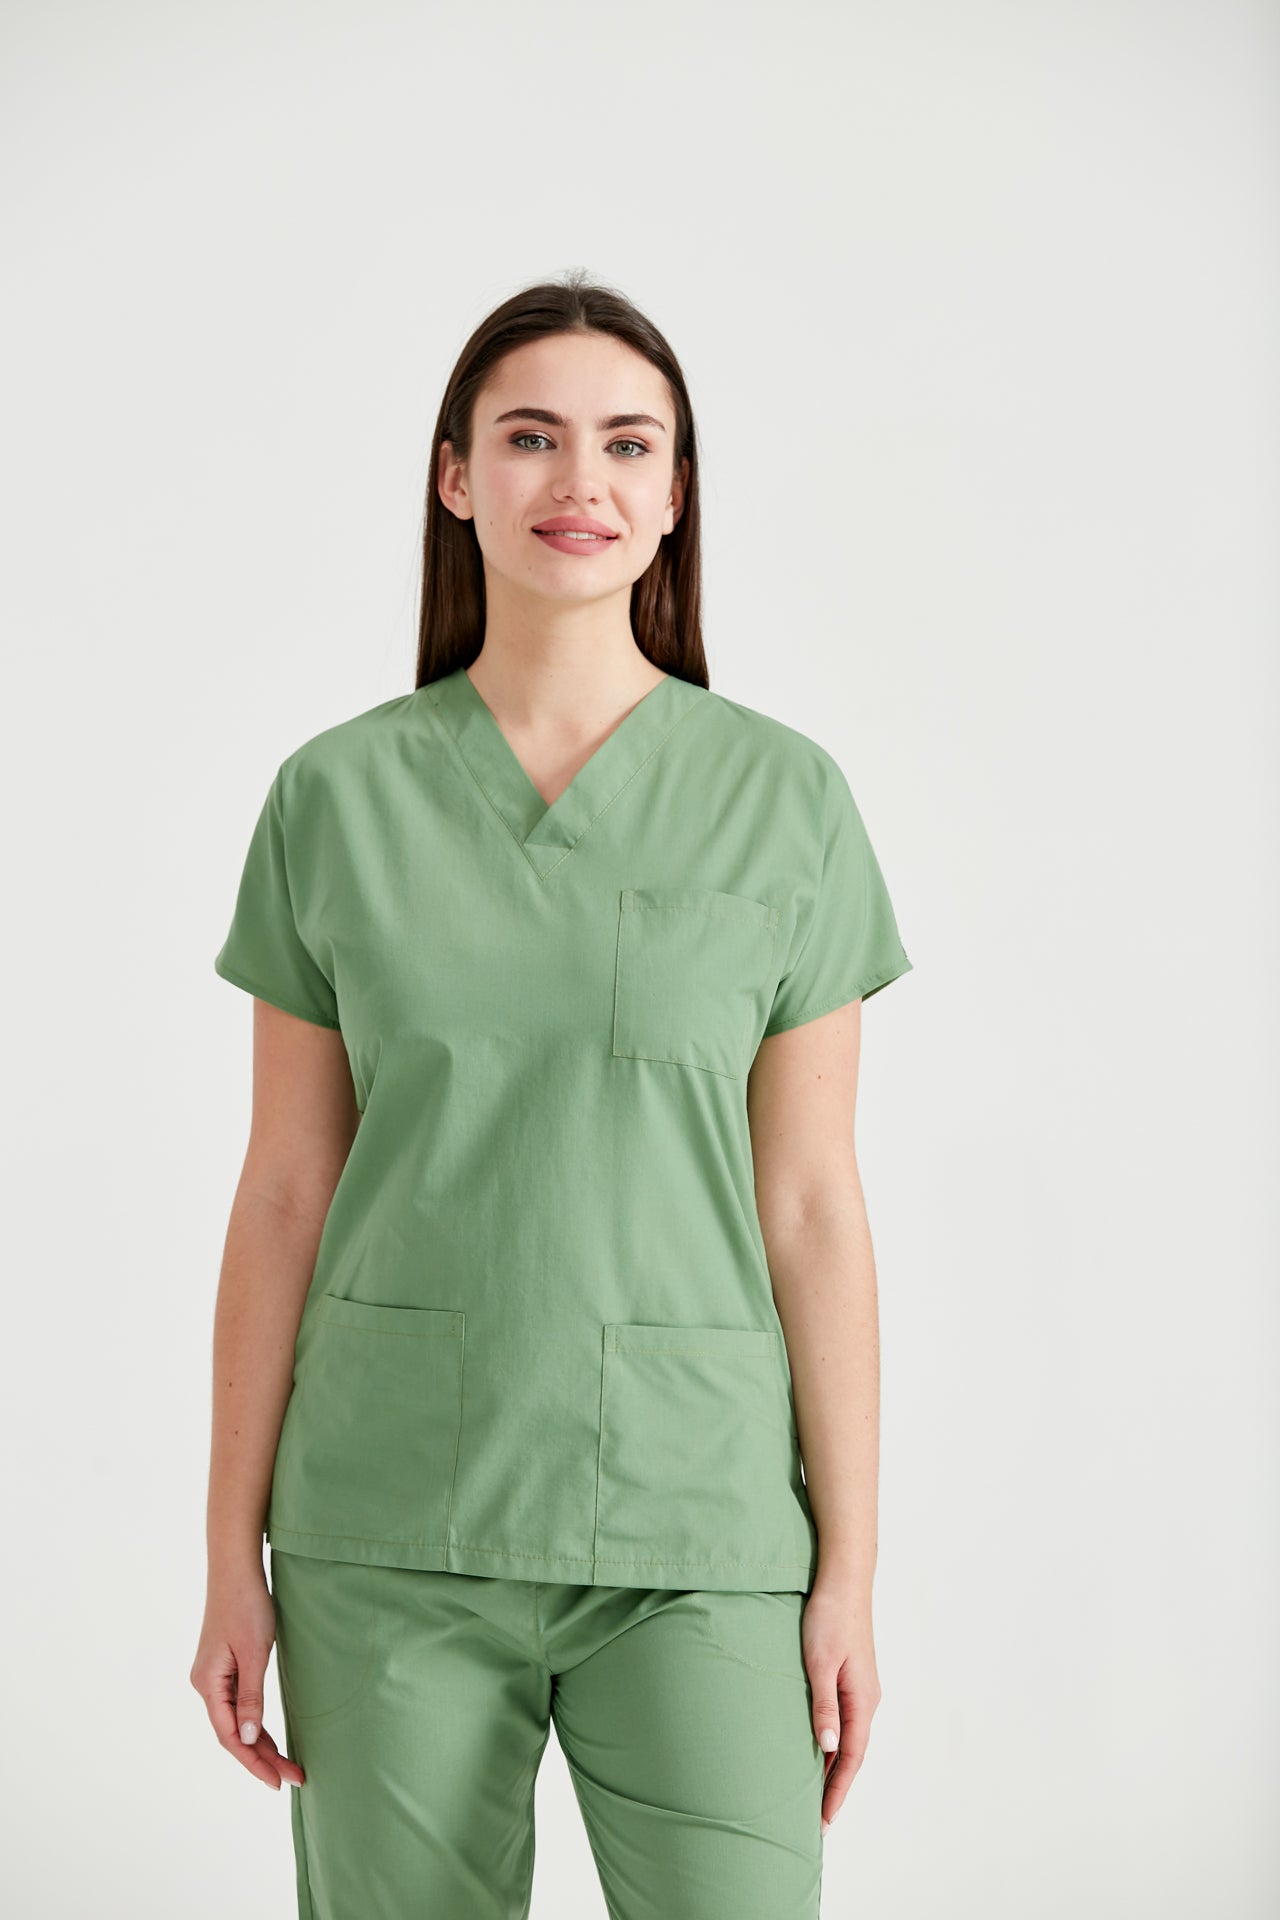 Asistenta medicala imbracata in costum medical verde fistic Pistaccio, vedere din fata